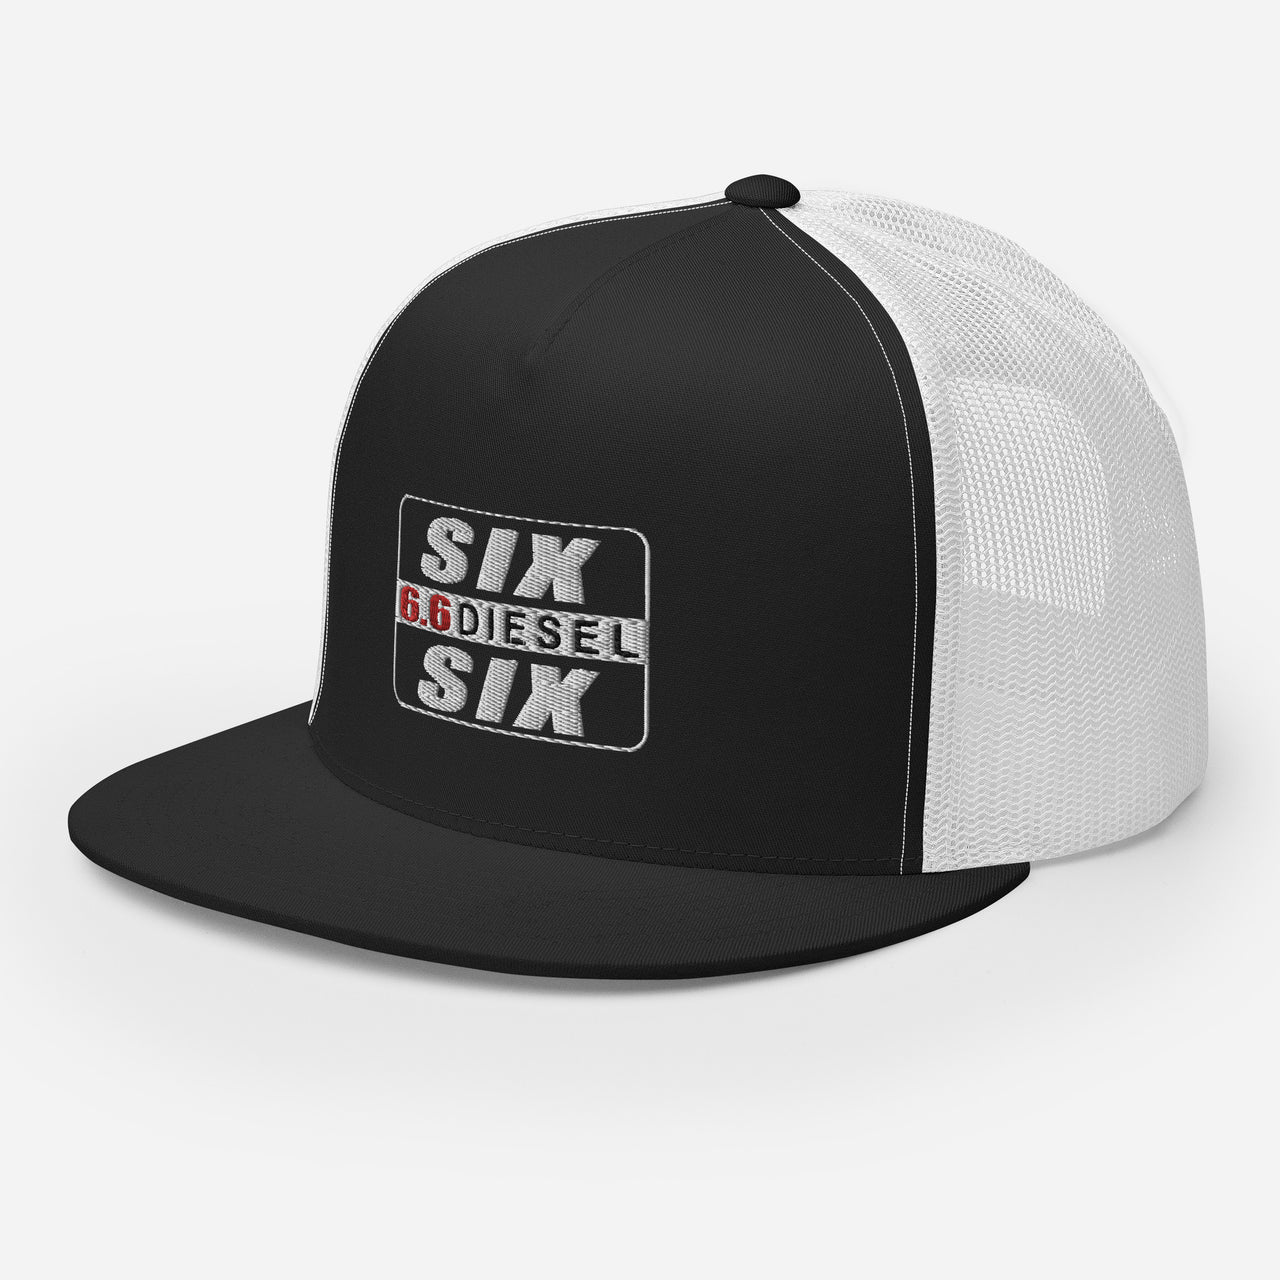 Duramax Trucker hat in black and white 3/4 view